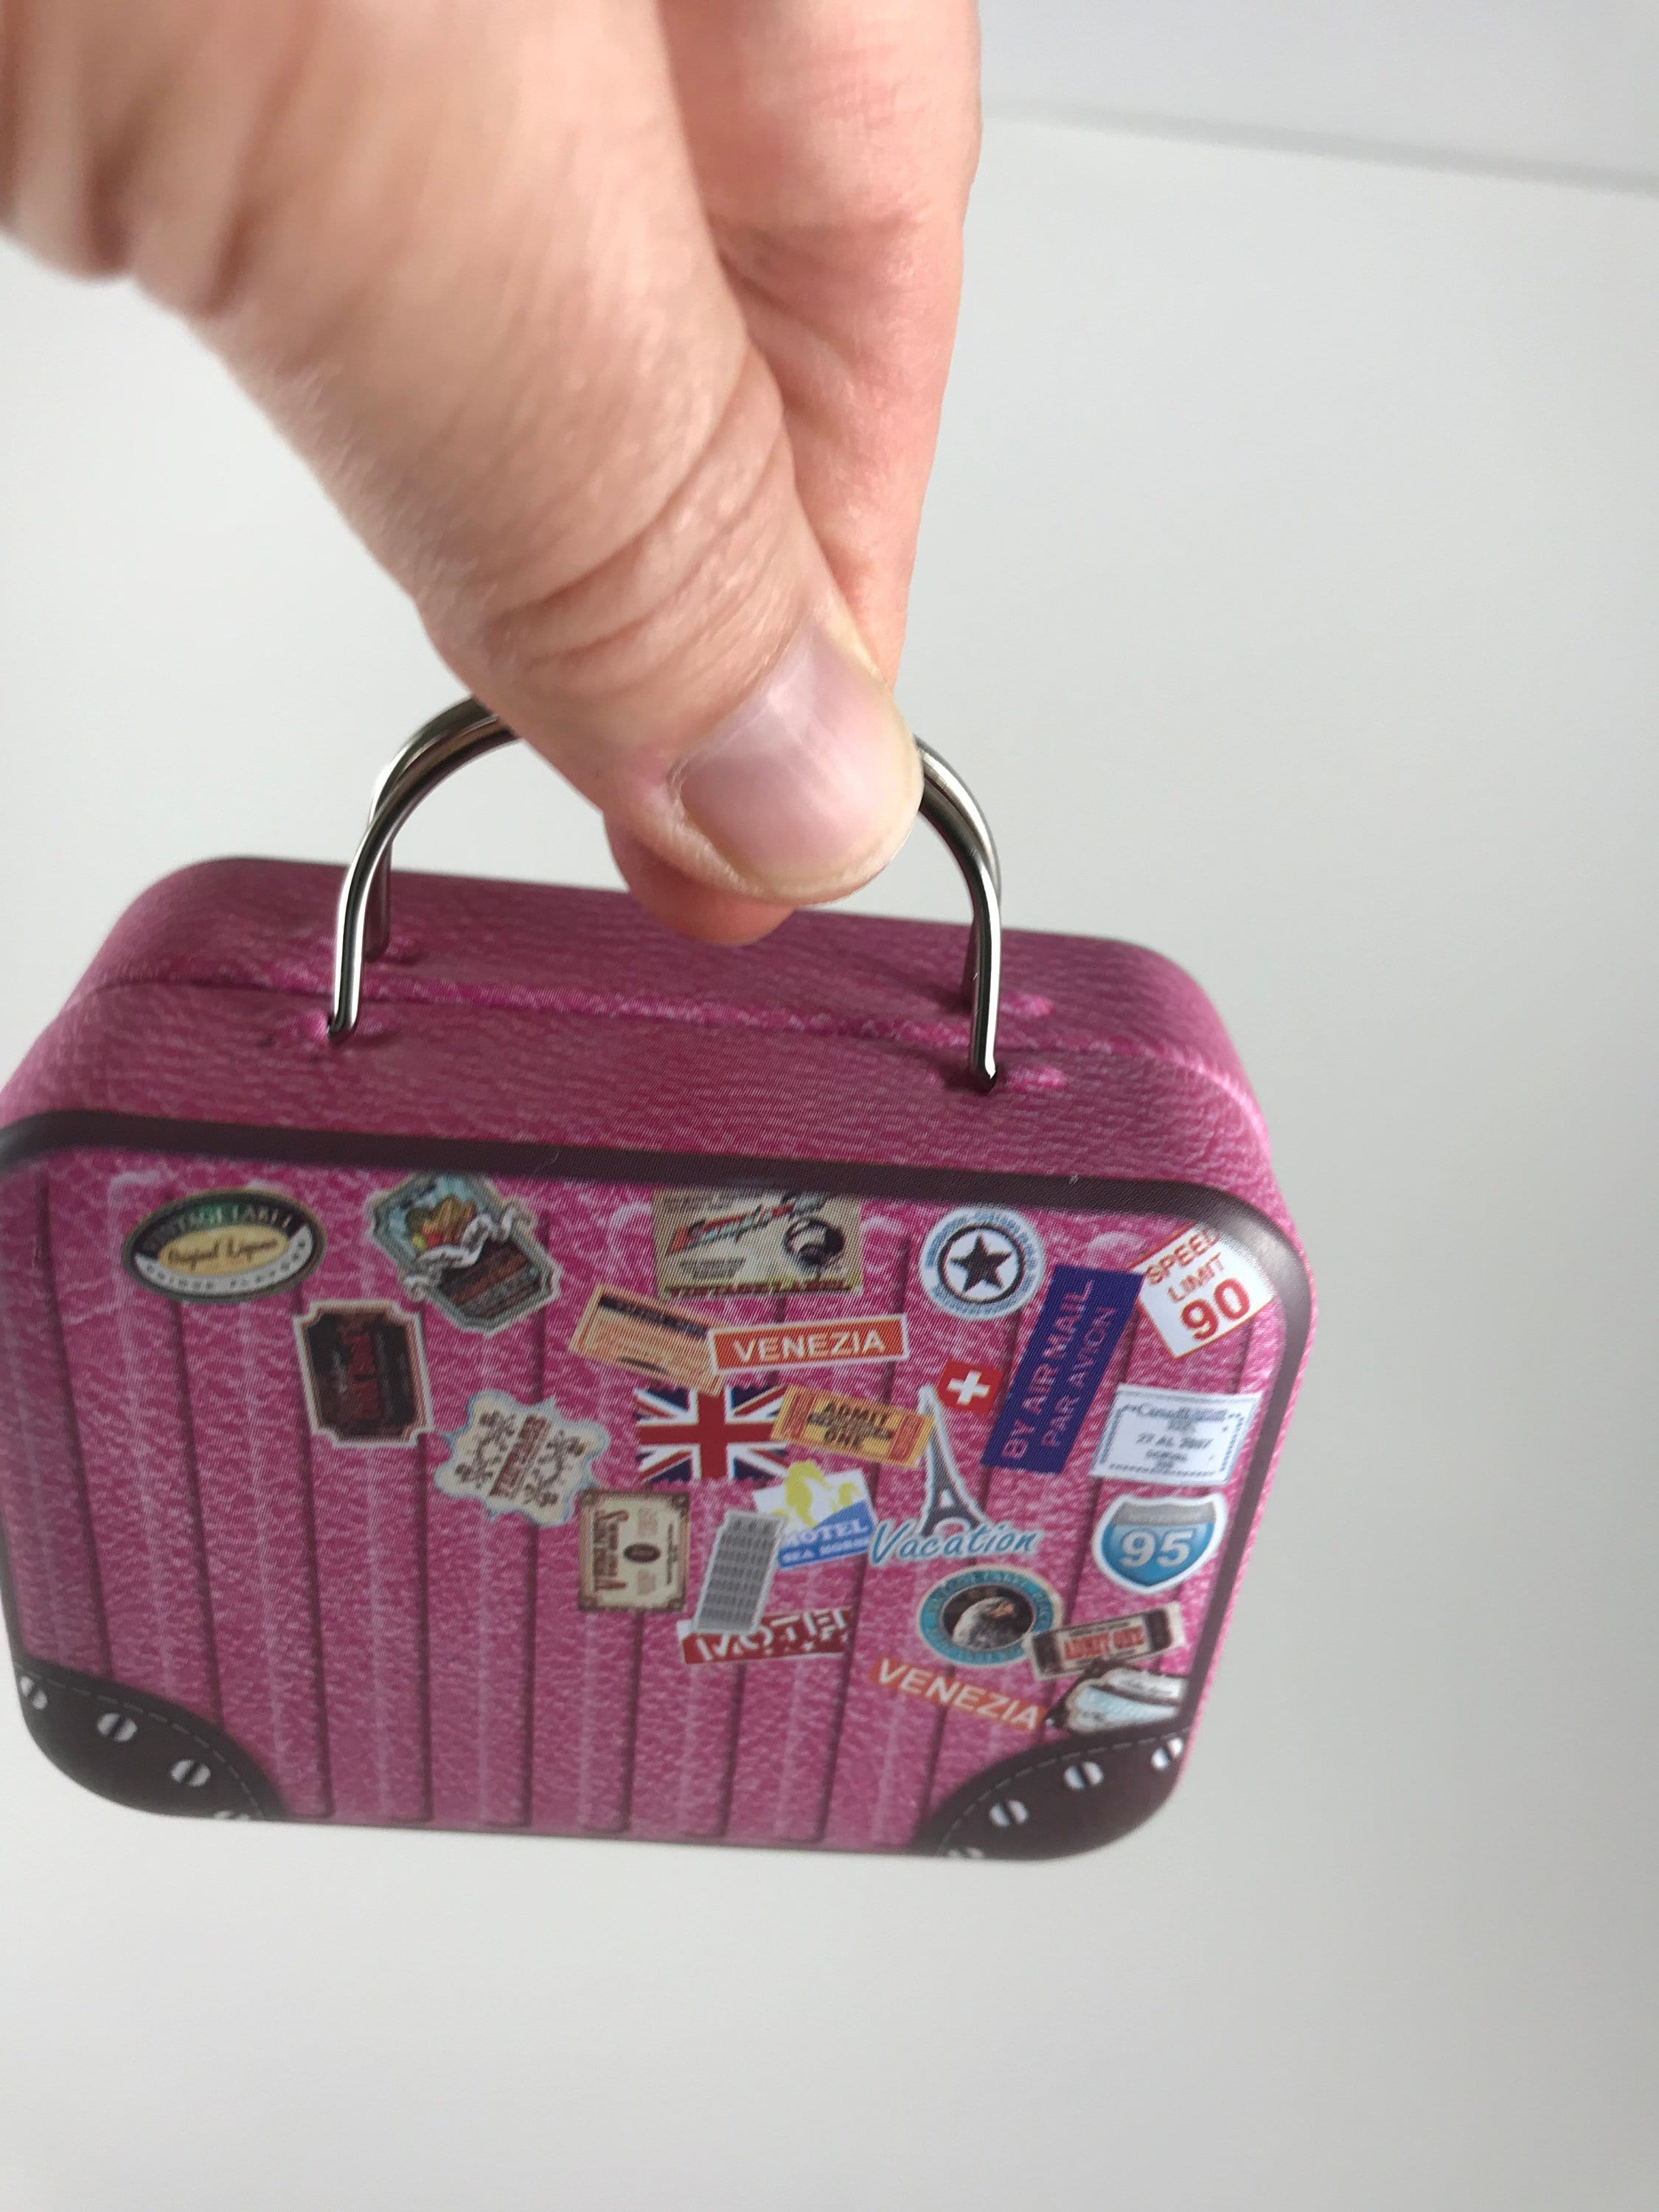 USA 1/6 Travel Luggage Case Bag Miniature Trunk Mini Suitcase Dolls  Accessories